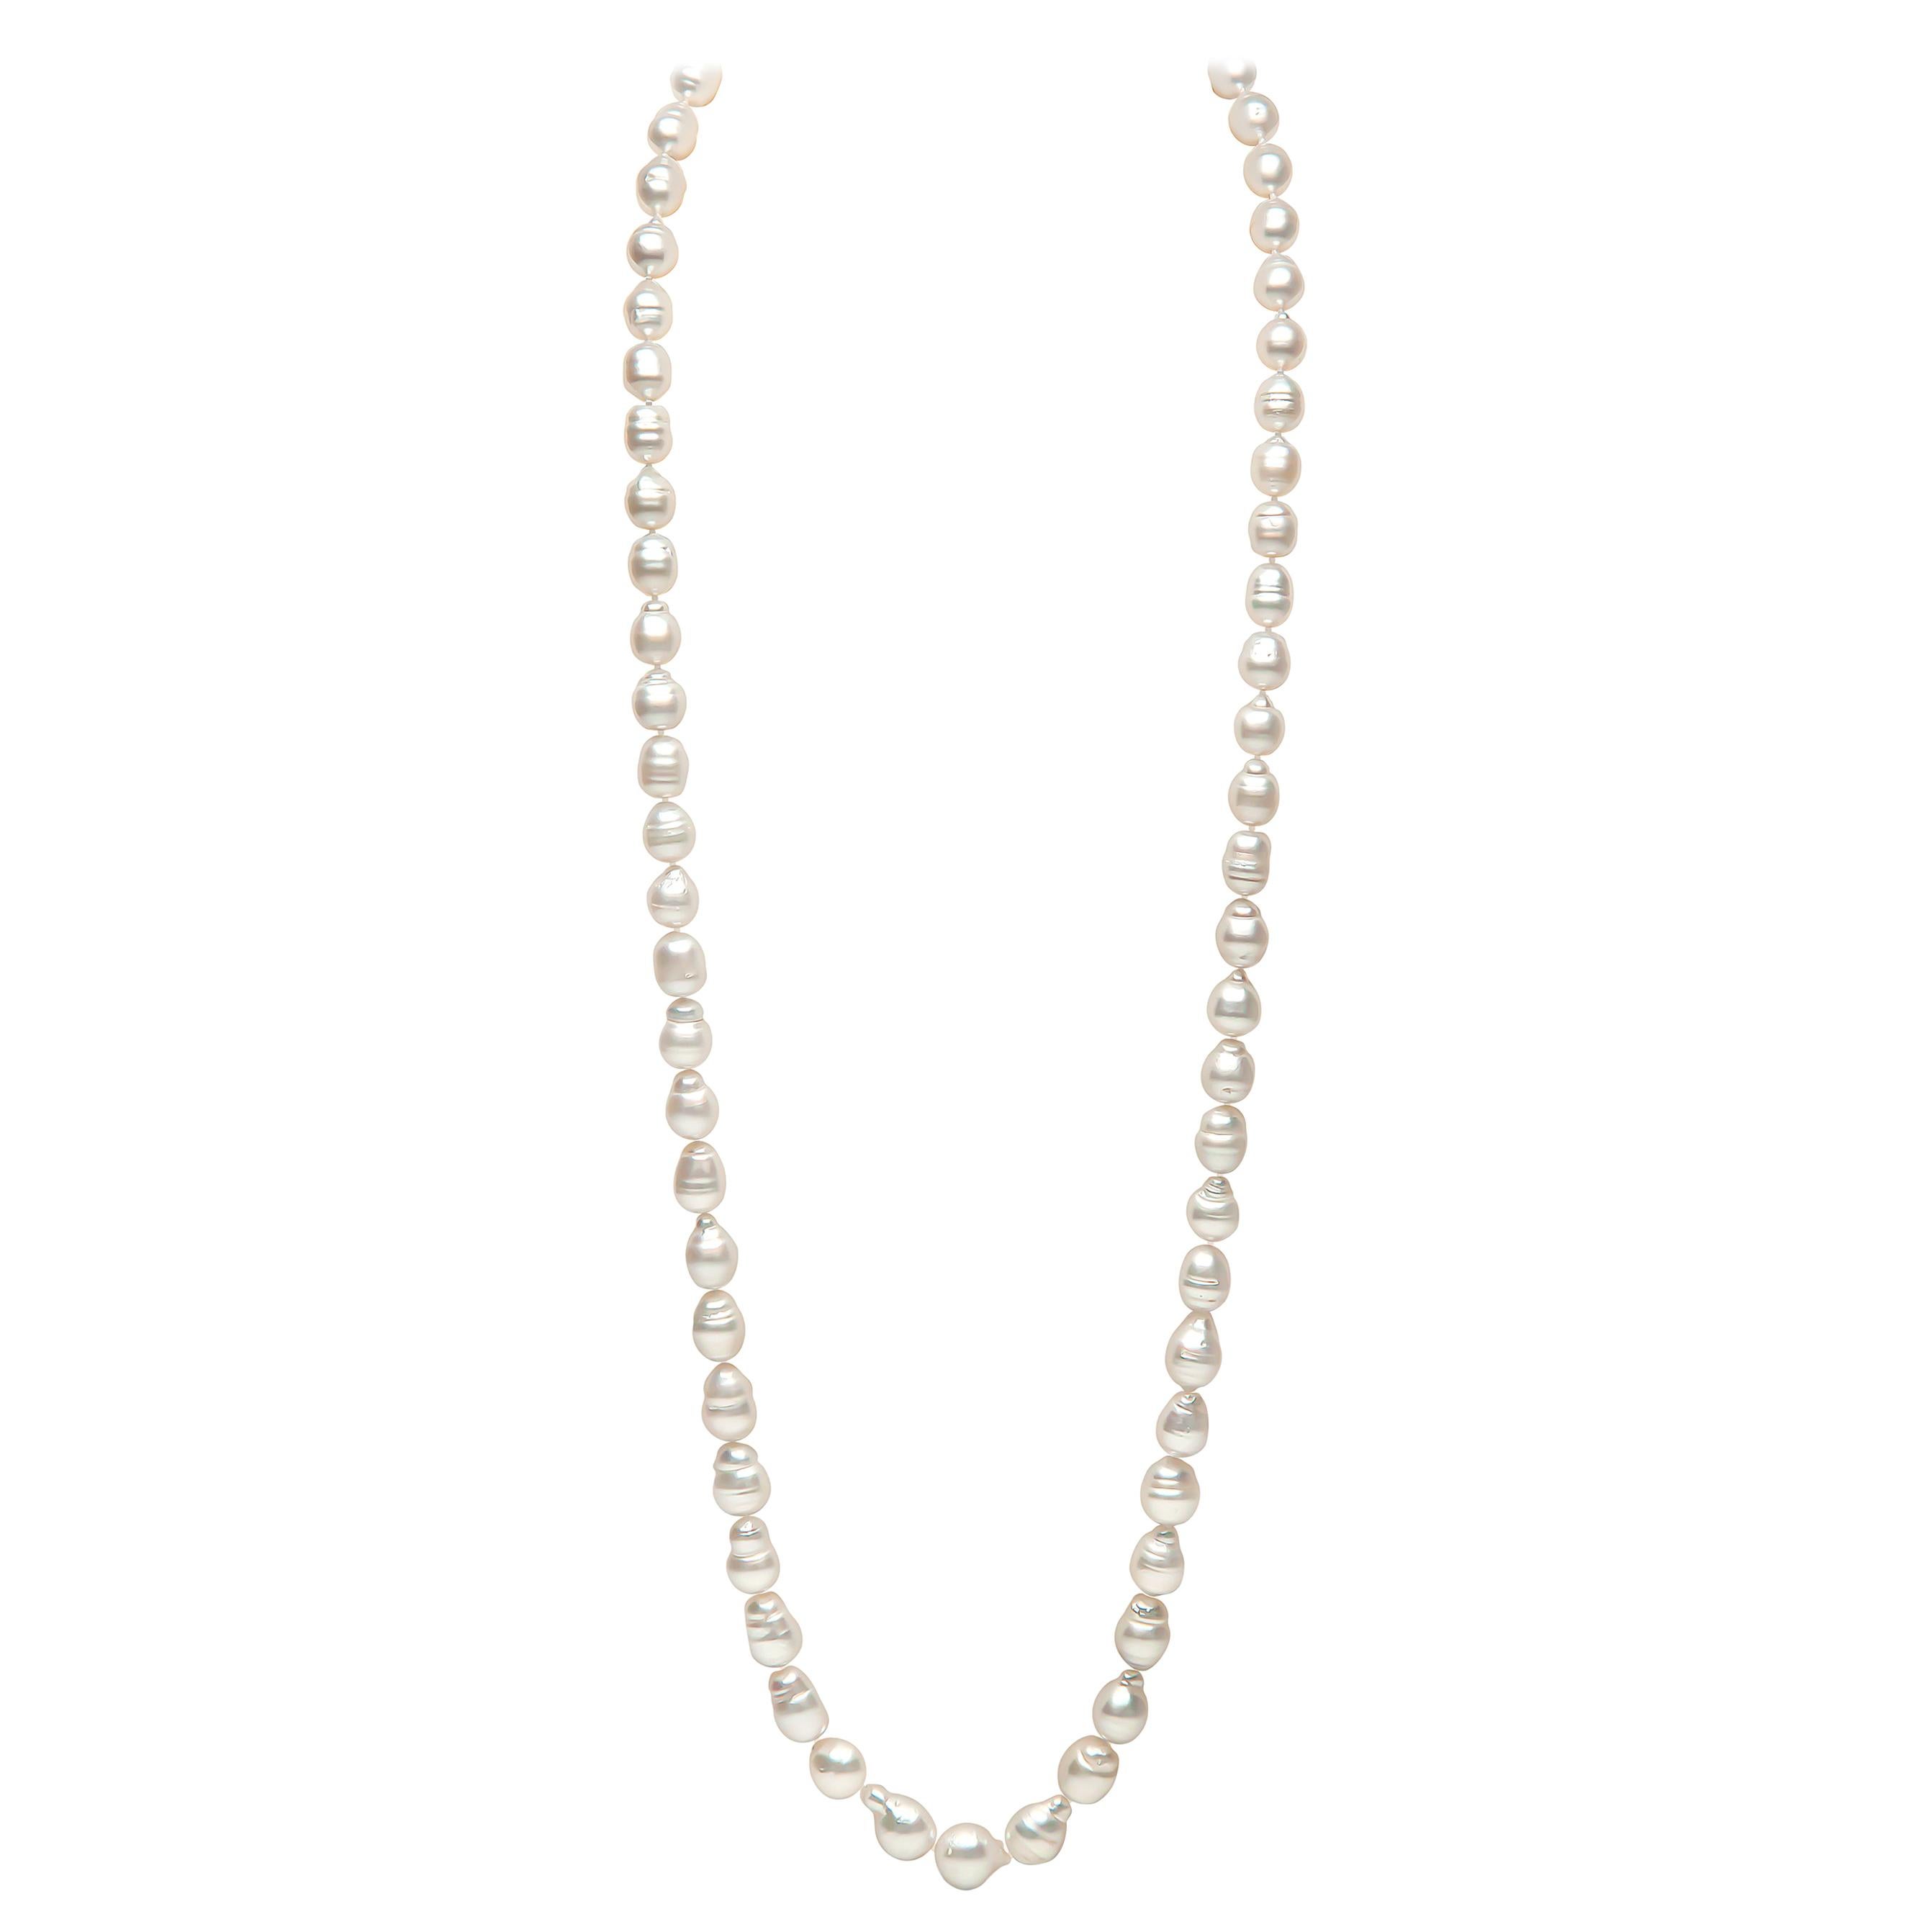 Yoko London Baroque South Sea Pearl Necklace in 18 Karat White Gold